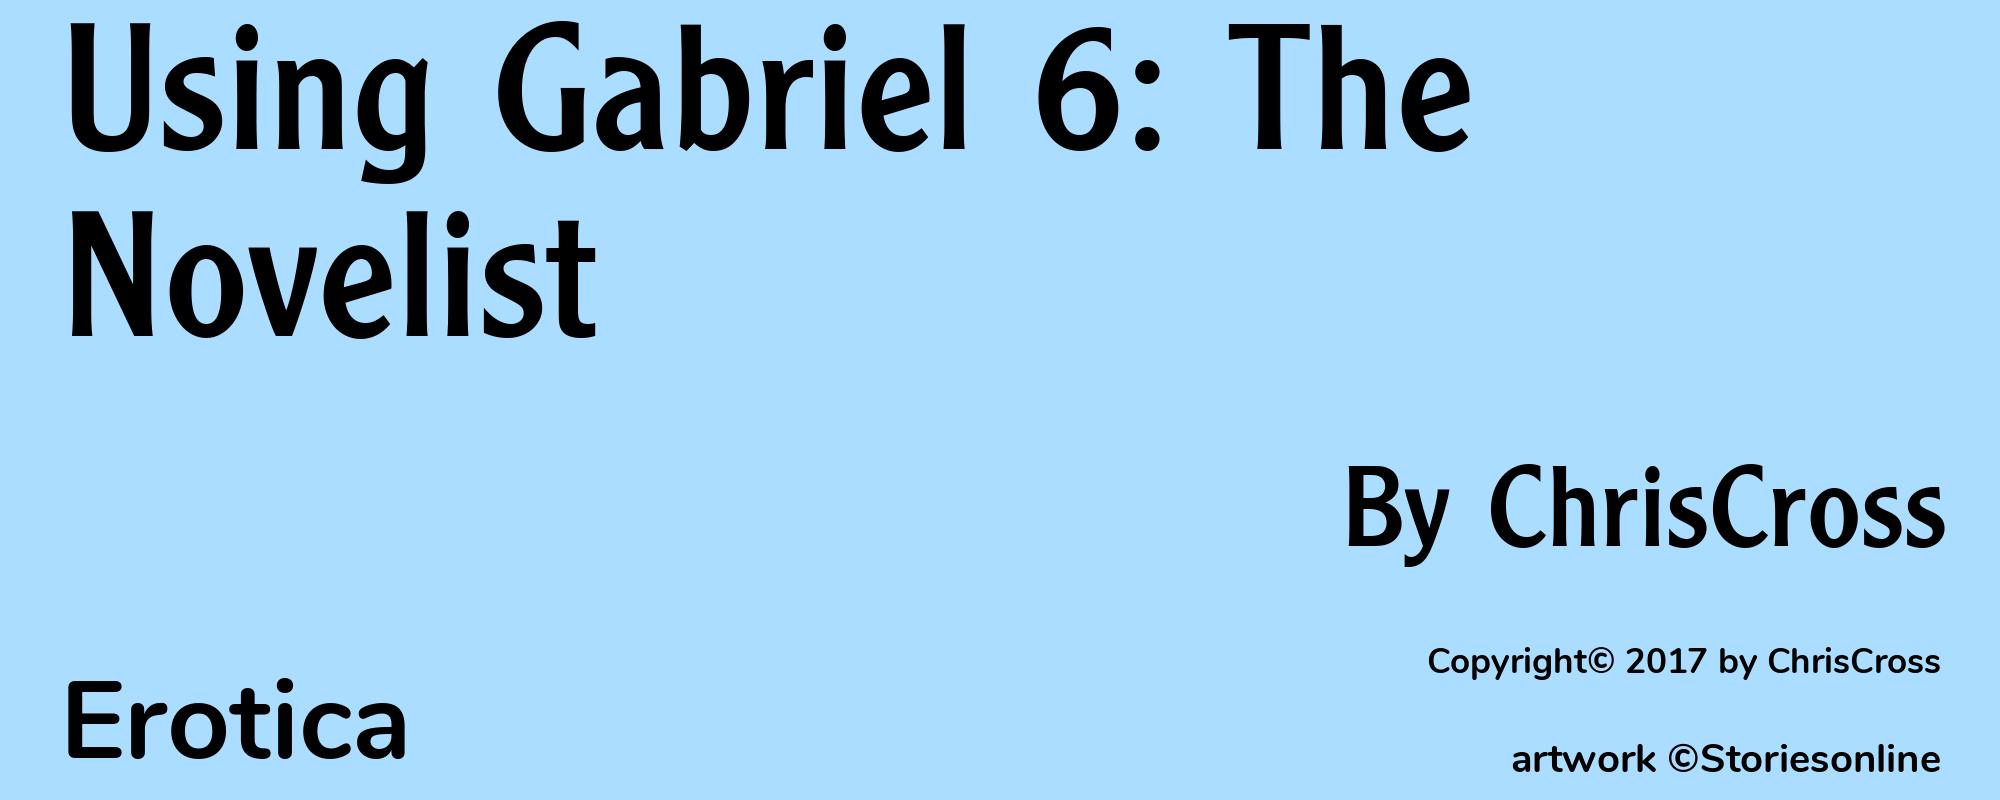 Using Gabriel 6: The Novelist - Cover